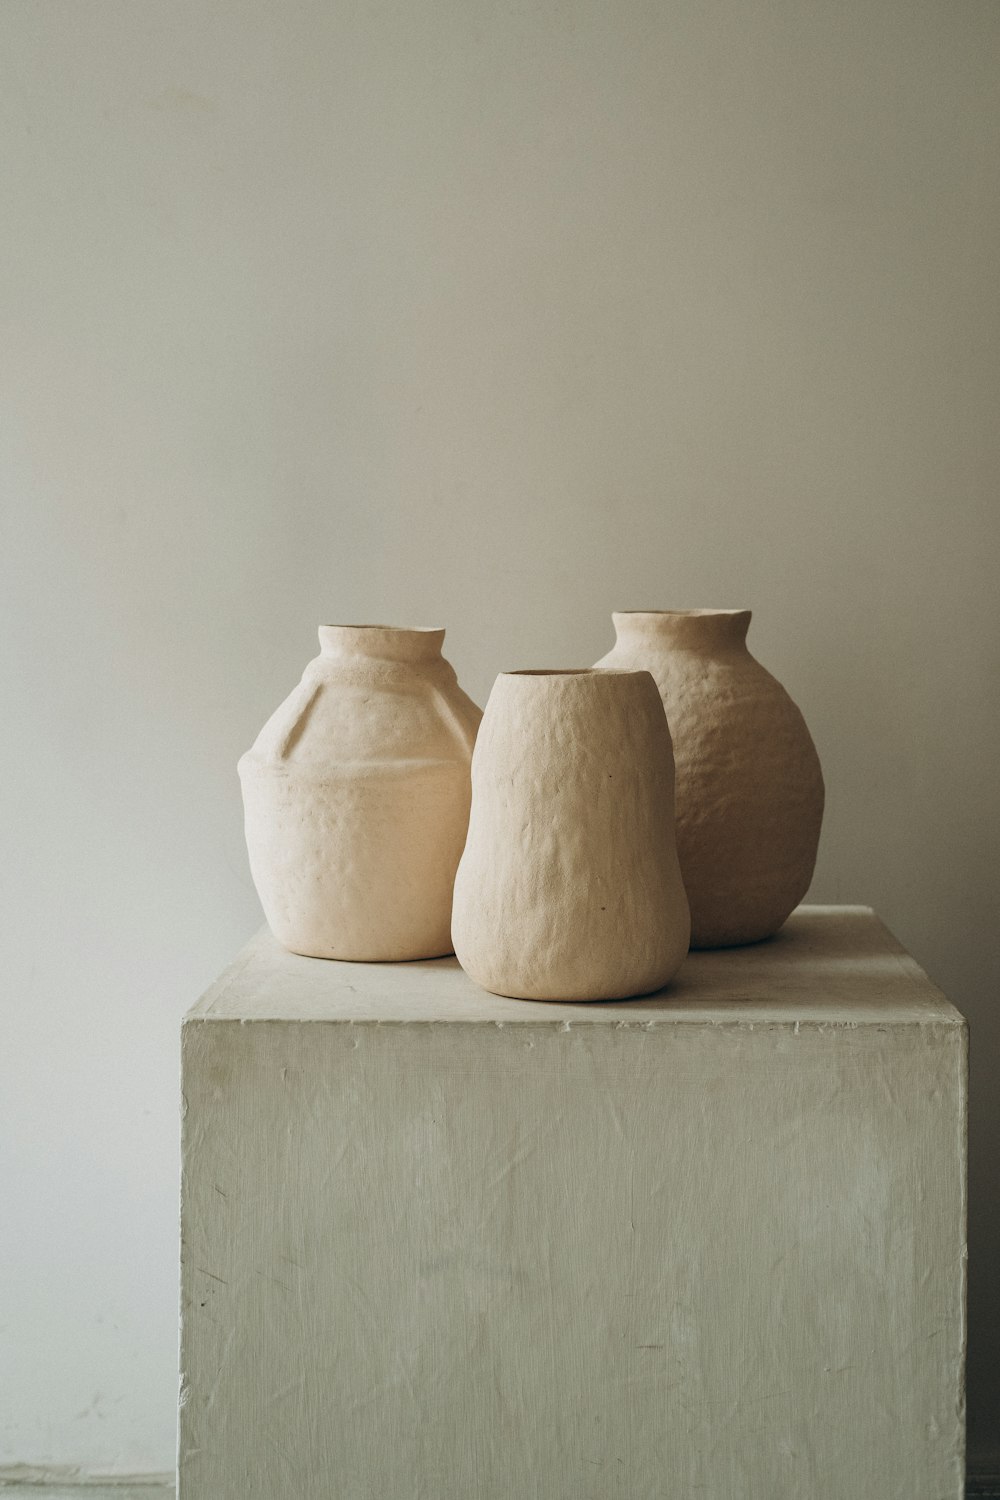 3 vasi in argilla marrone su tavolo in cemento bianco